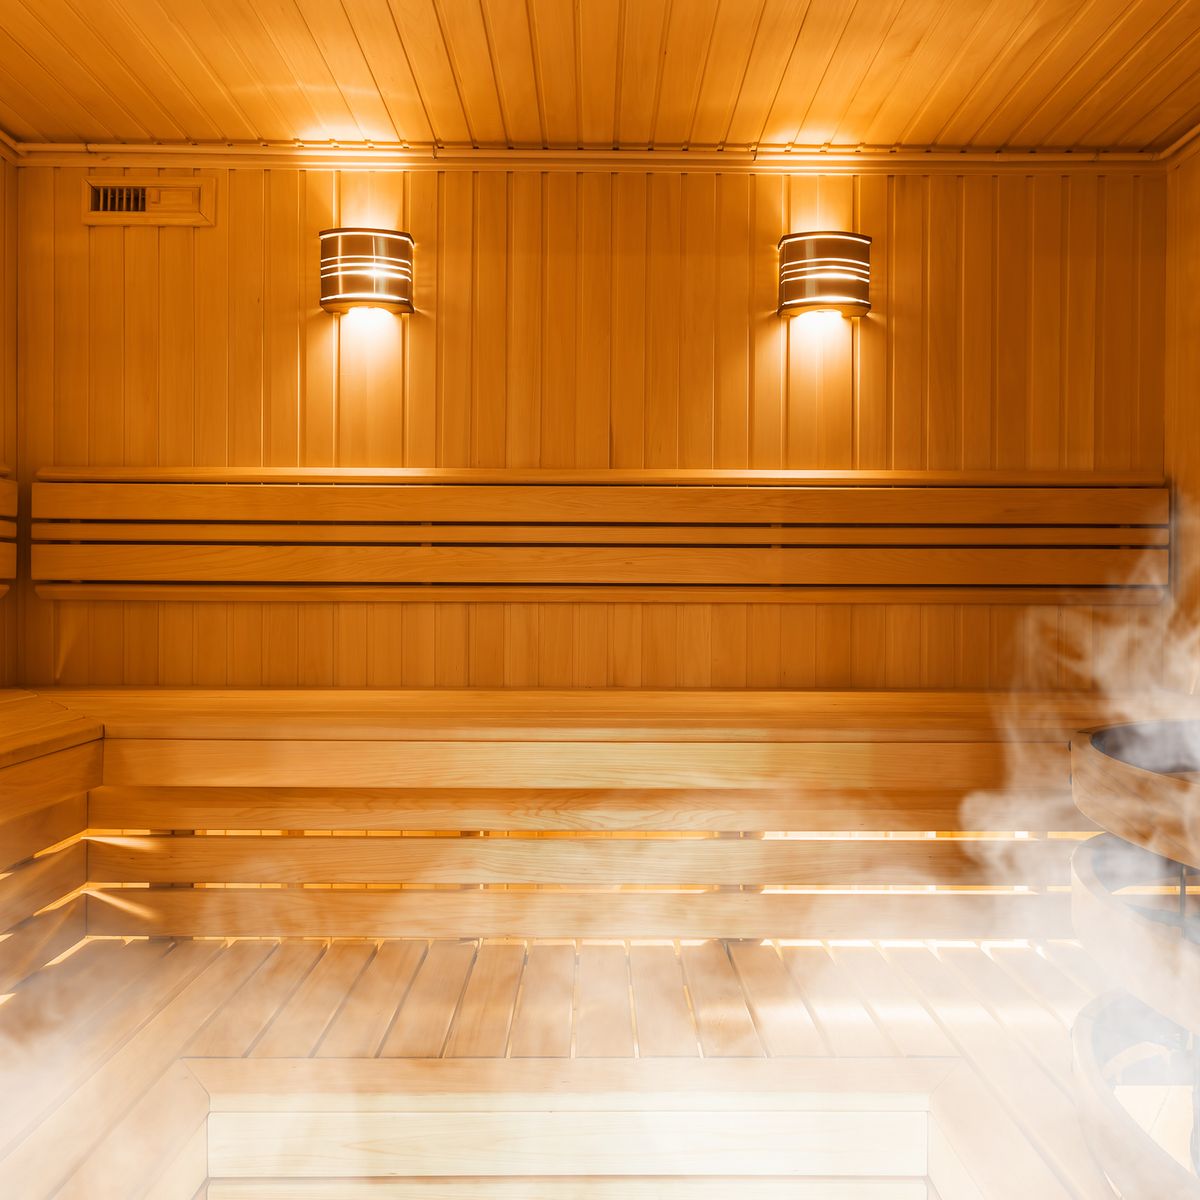 interior of finnish sauna, classic wooden sauna